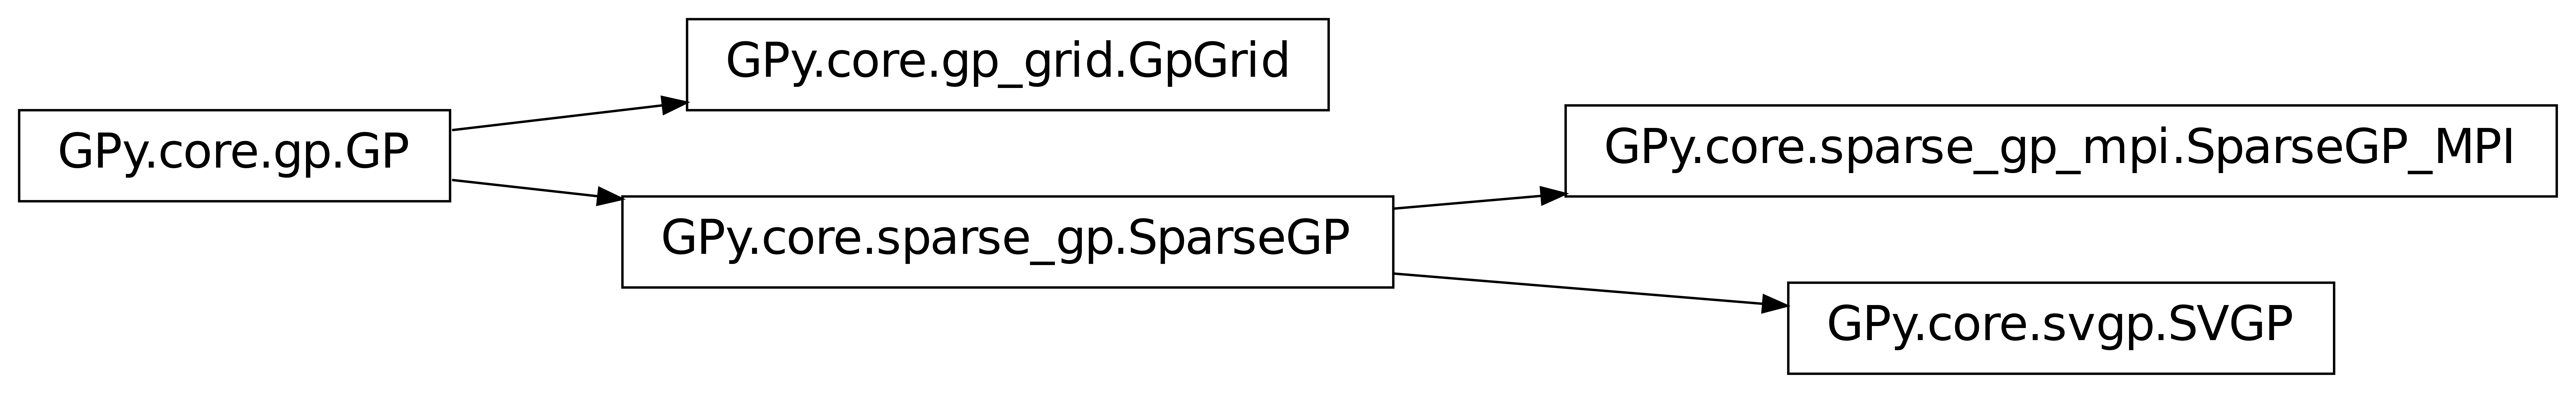 Inheritance diagram of GPy.core.gp_grid.GpGrid, GPy.core.sparse_gp.SparseGP, GPy.core.sparse_gp_mpi.SparseGP_MPI, GPy.core.svgp.SVGP